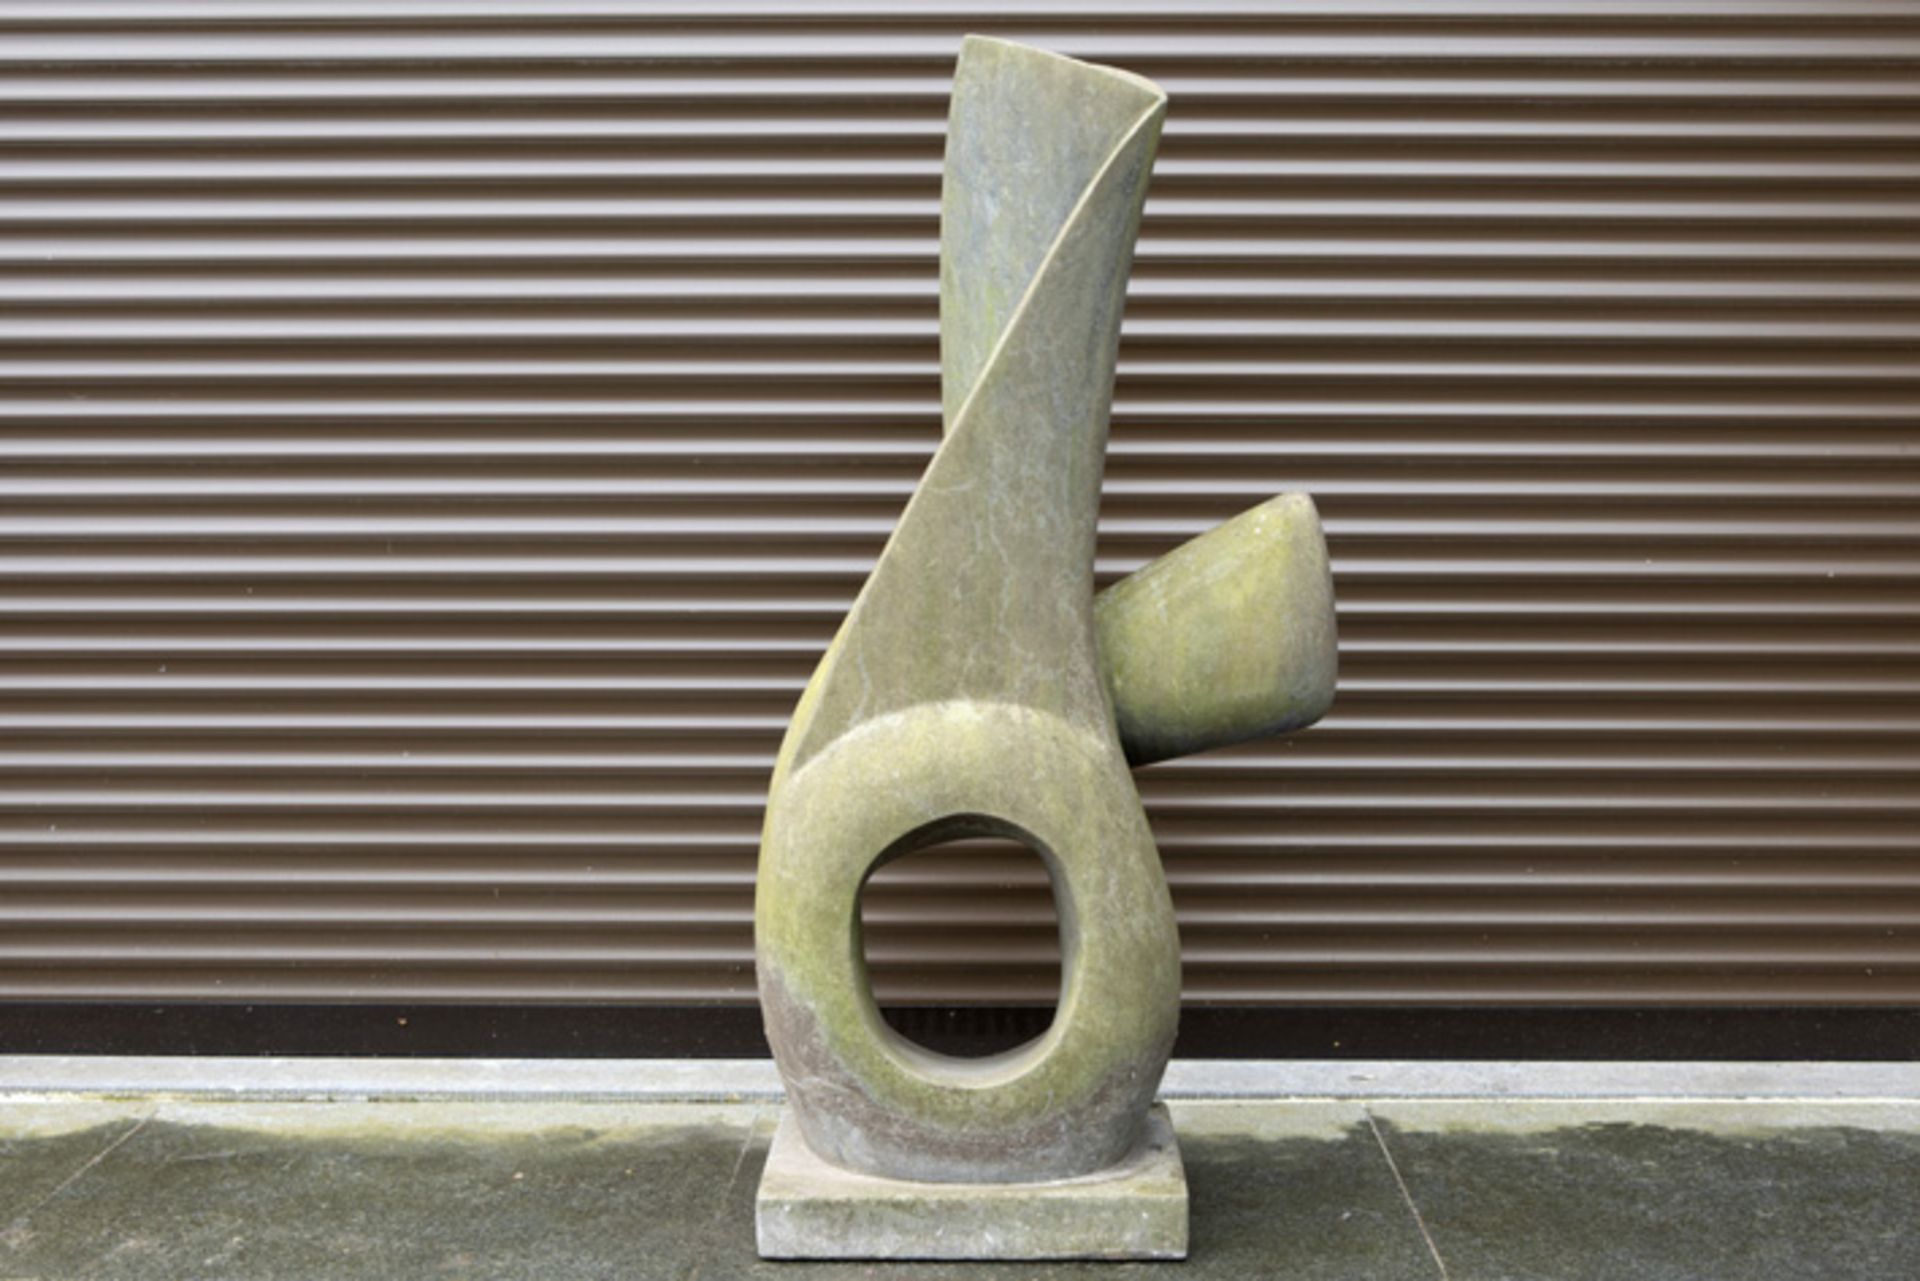 modern stone (garden)sculpture with an abstract design||Moderne (tuin)sculptuur in steen met een